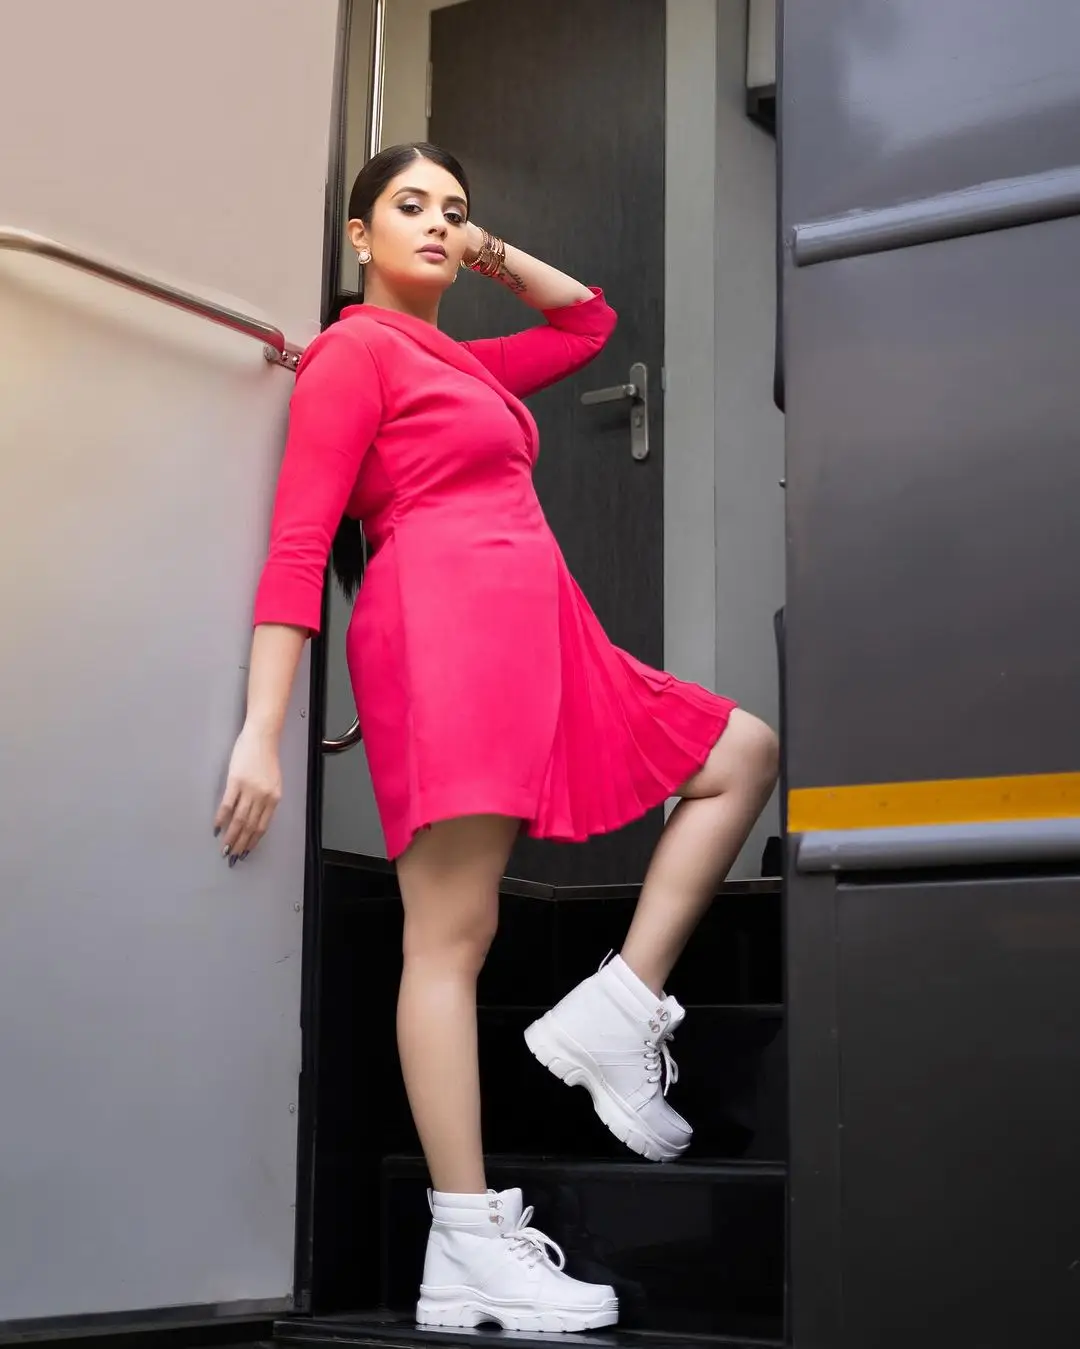 Gemini TV Anchor Sreemukhi Long Legs Show in Pink Skirt